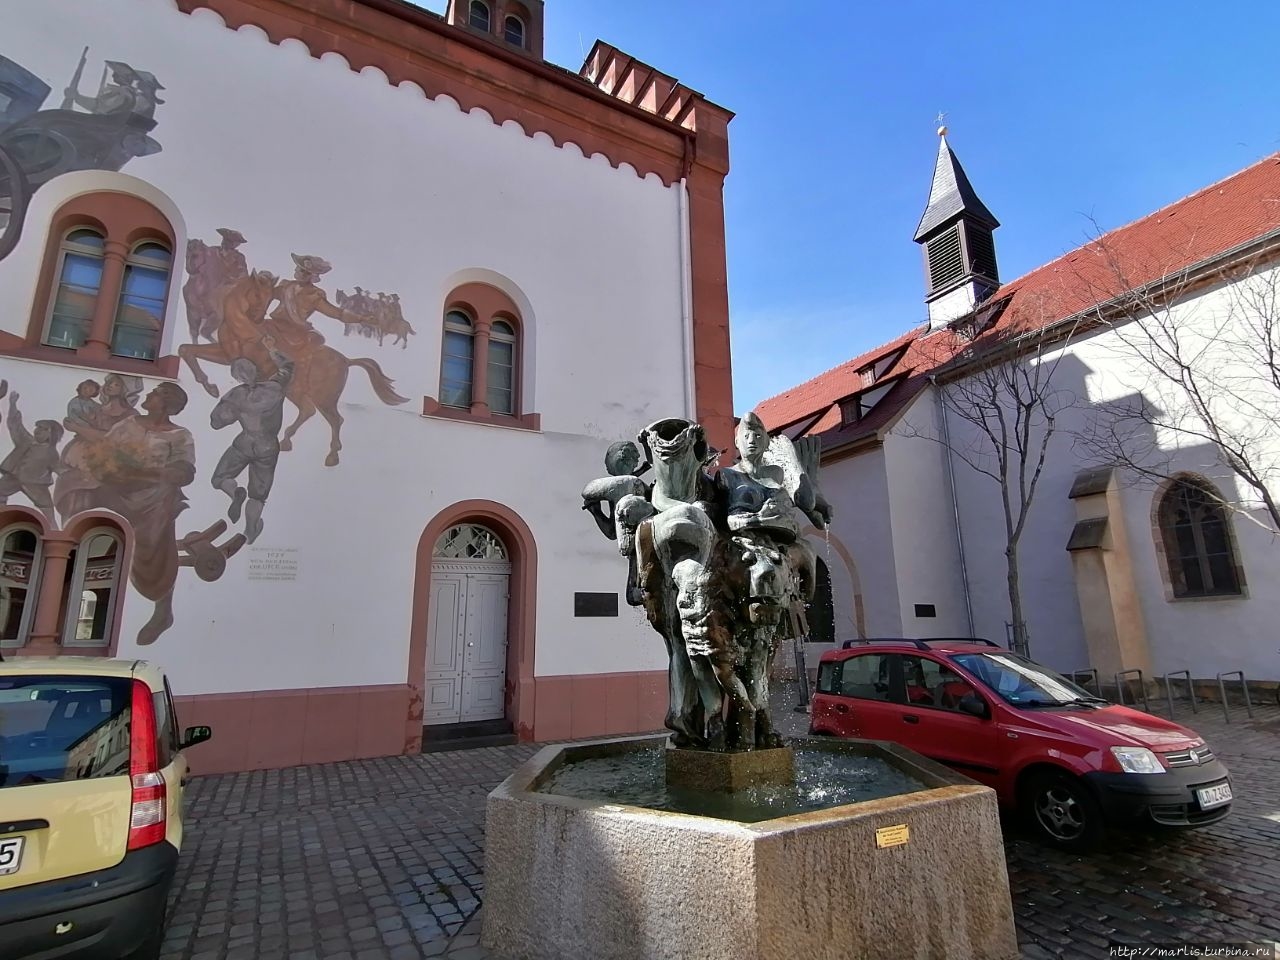 Исторический центр города Ландау Ландау, Германия